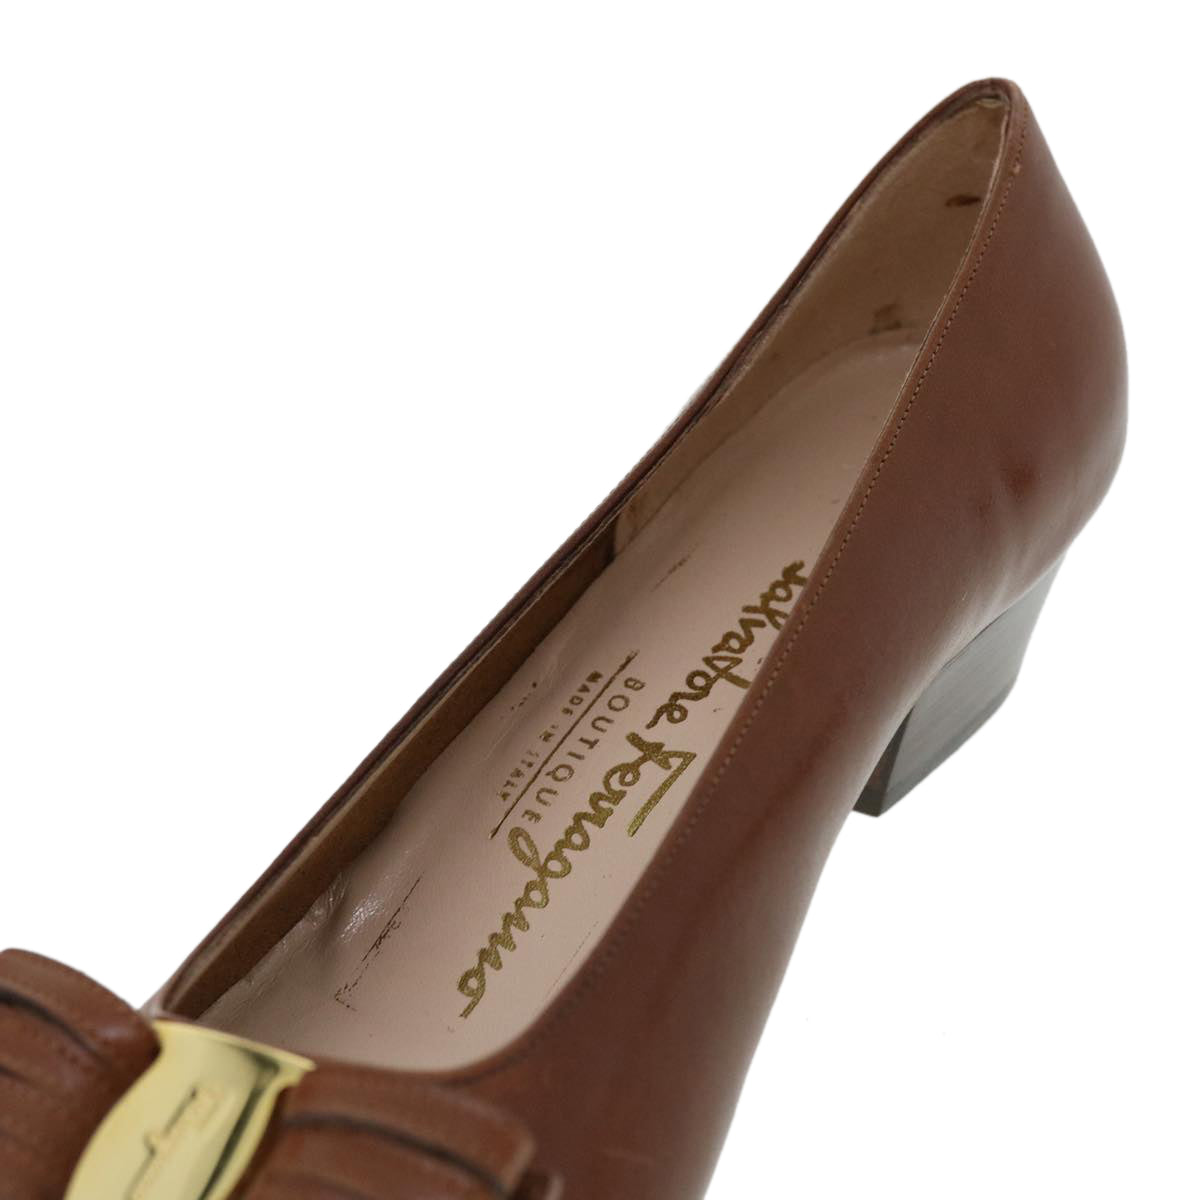 Salvatore Ferragamo shoes Leather Brown Auth 37994